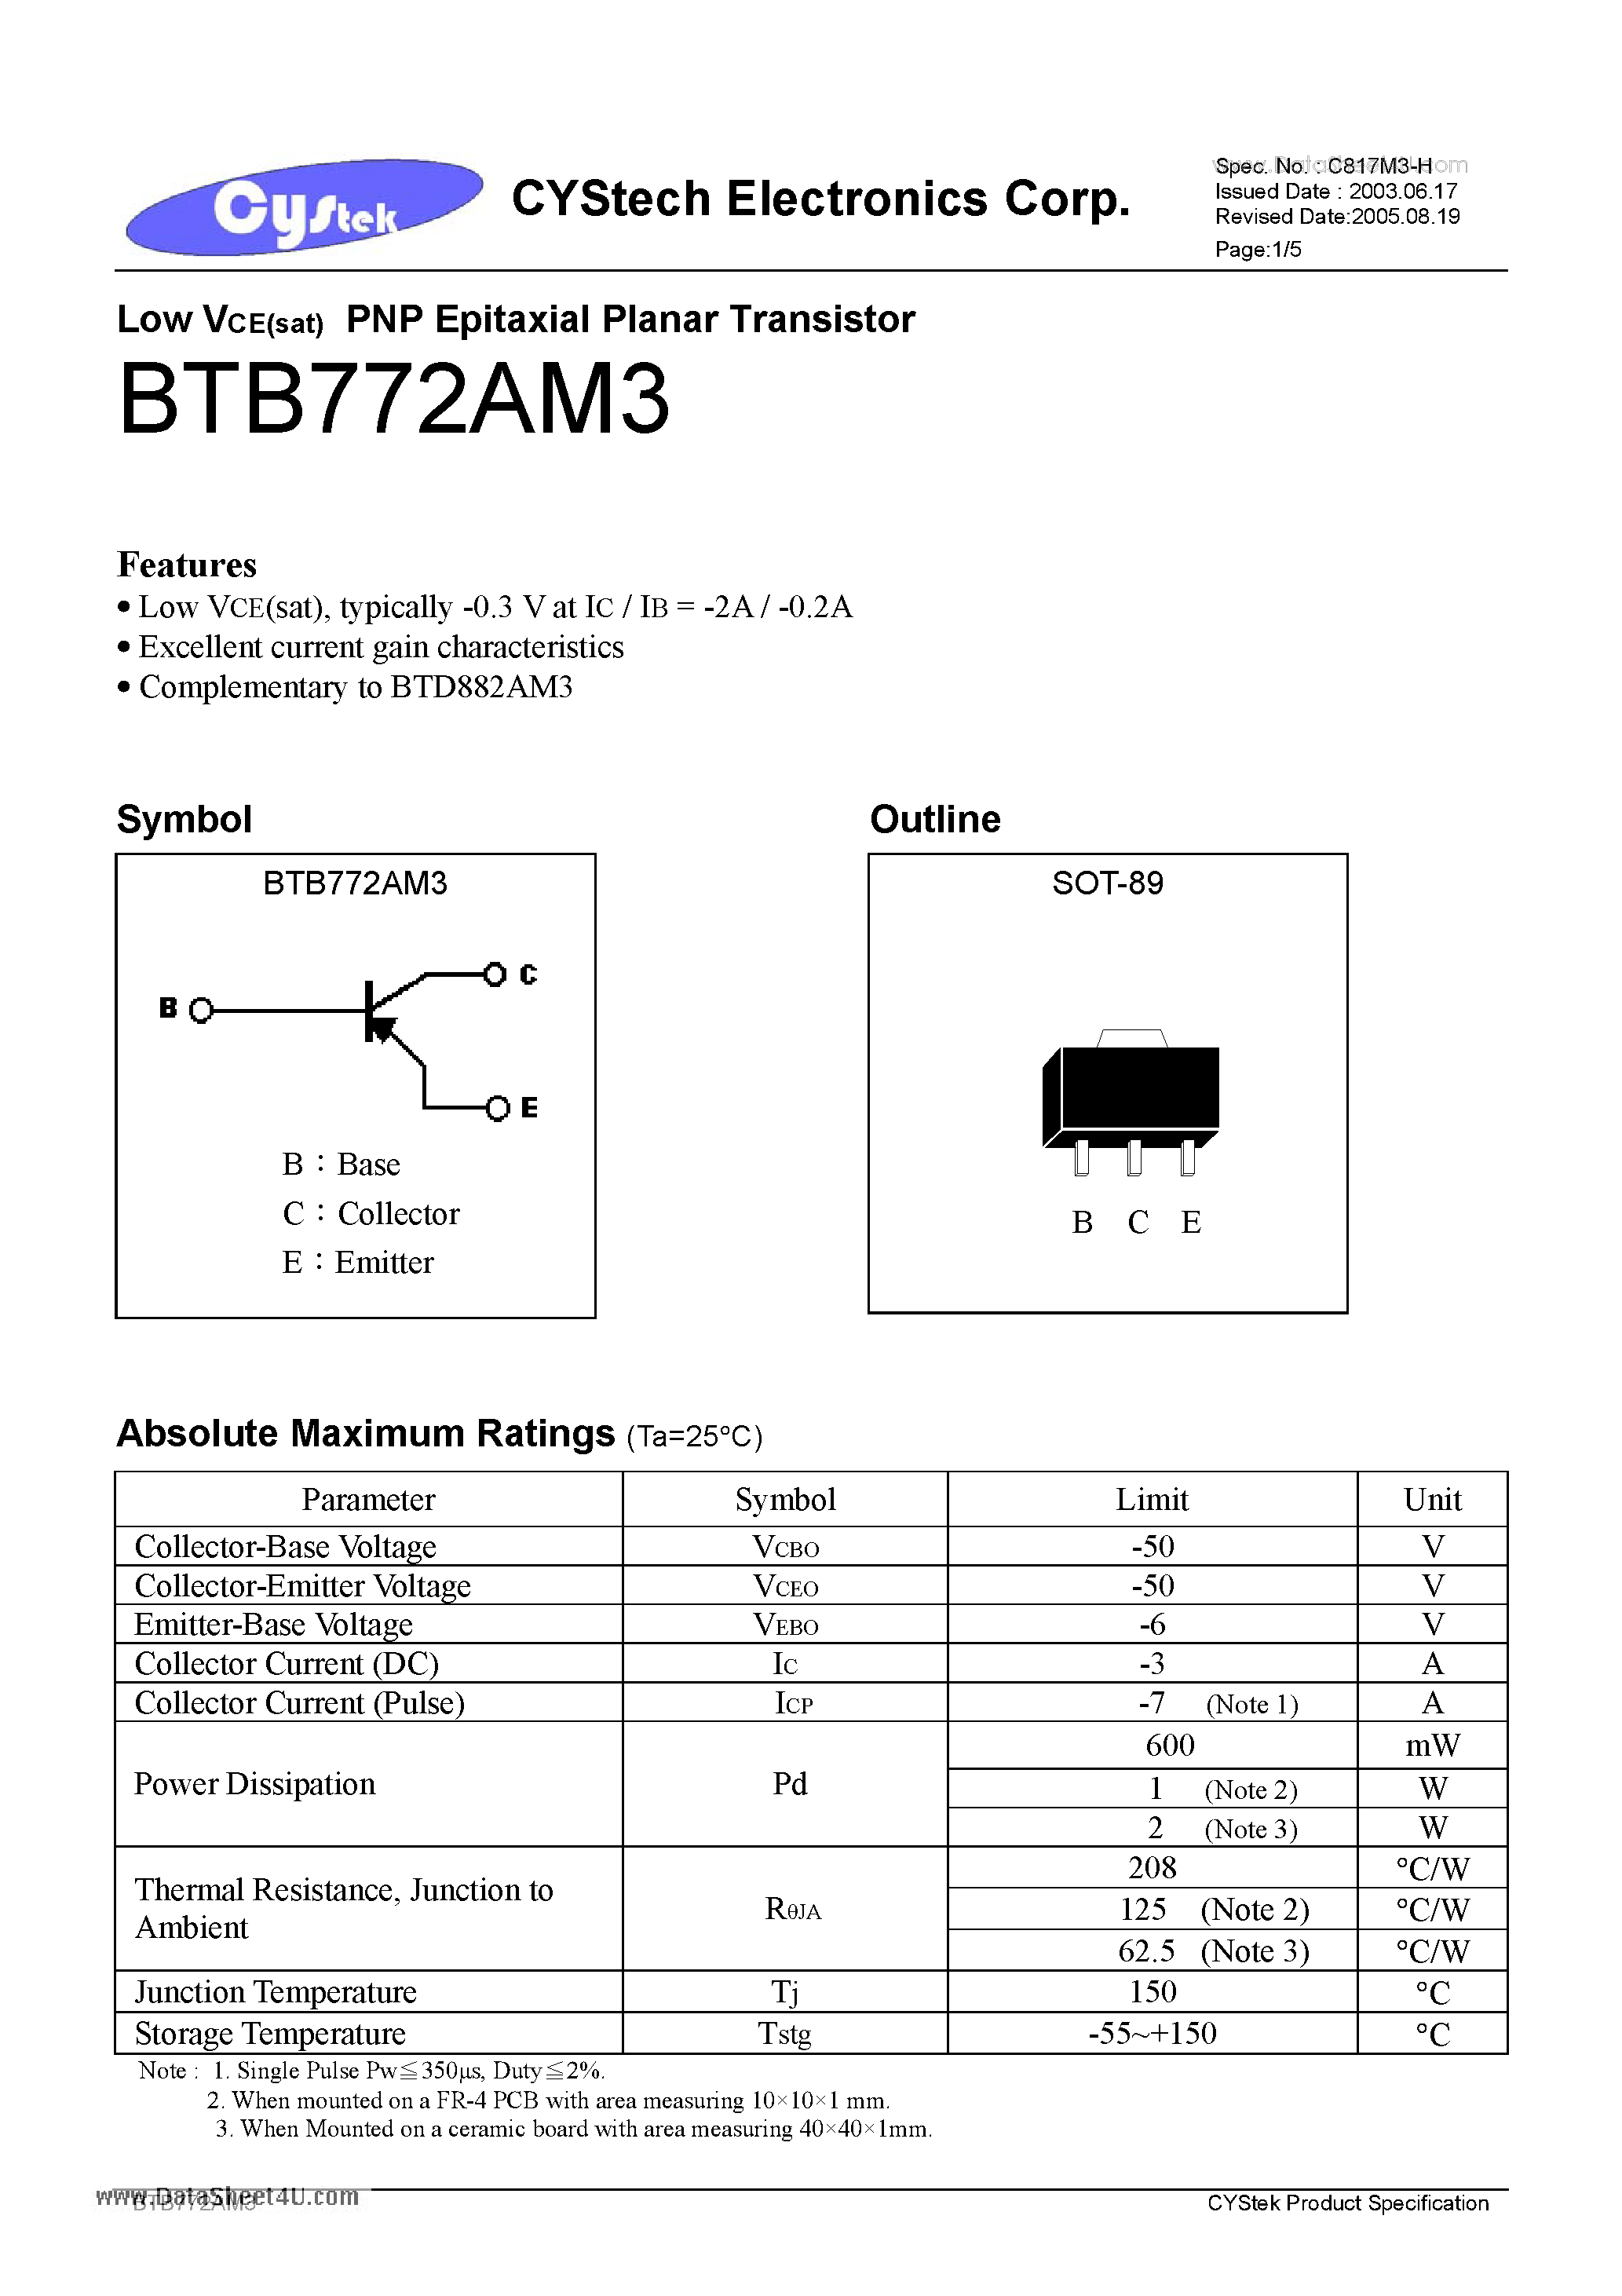 Datasheet BTB772AM3 - Low VCE(sat) PNP Epitaxial Planar Transistor page 1